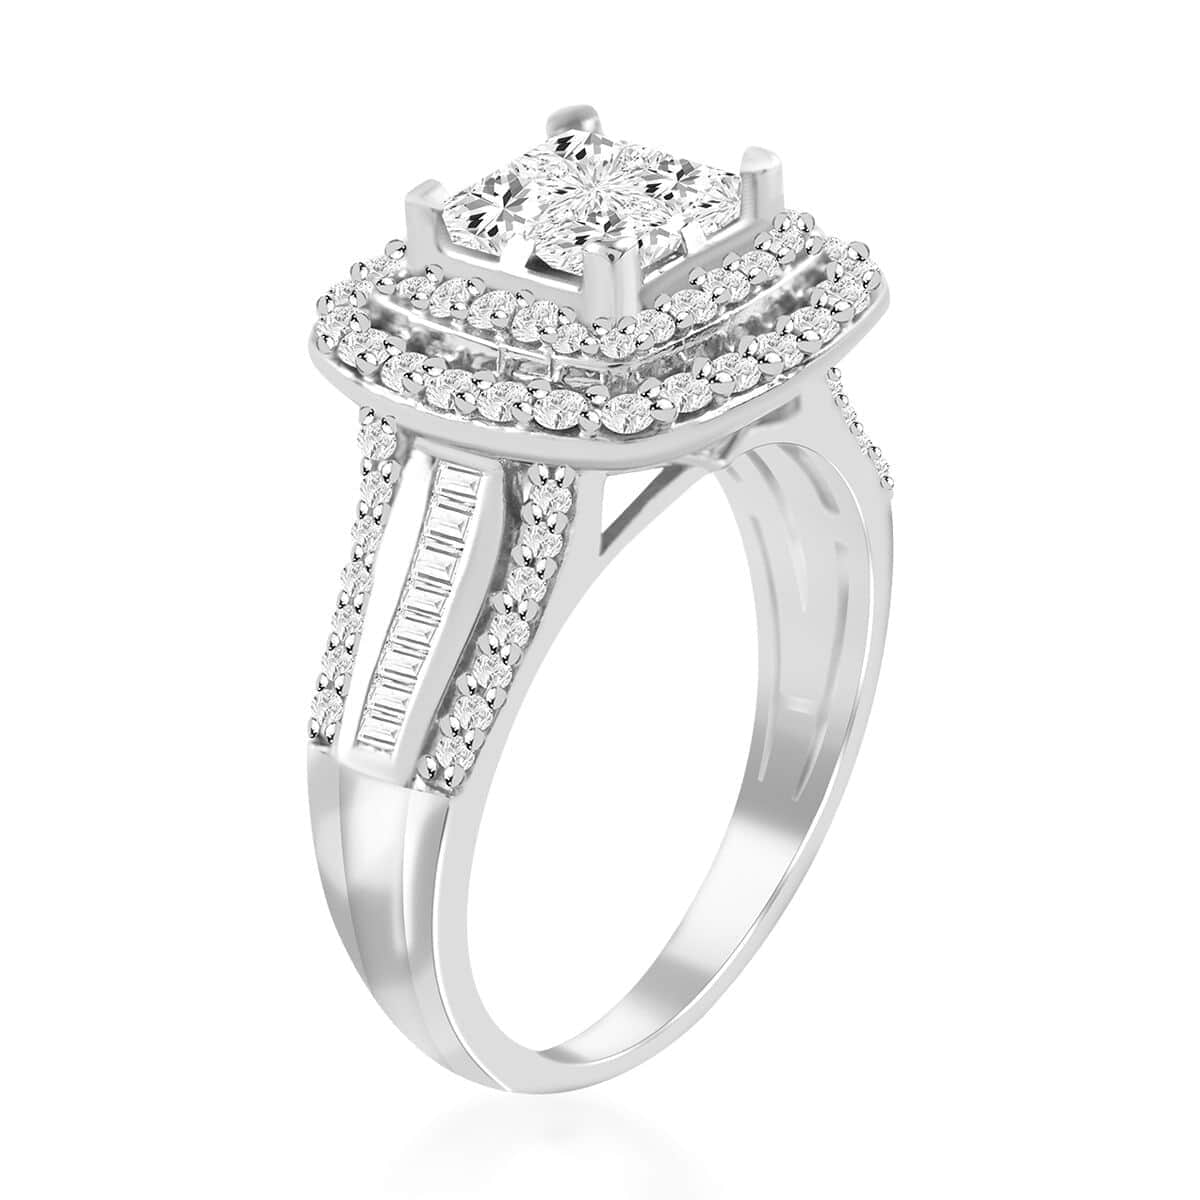 NY Closeout 10K White Gold Diamond Ring (Size 7.0) 5.70 Grams 1.75 ctw